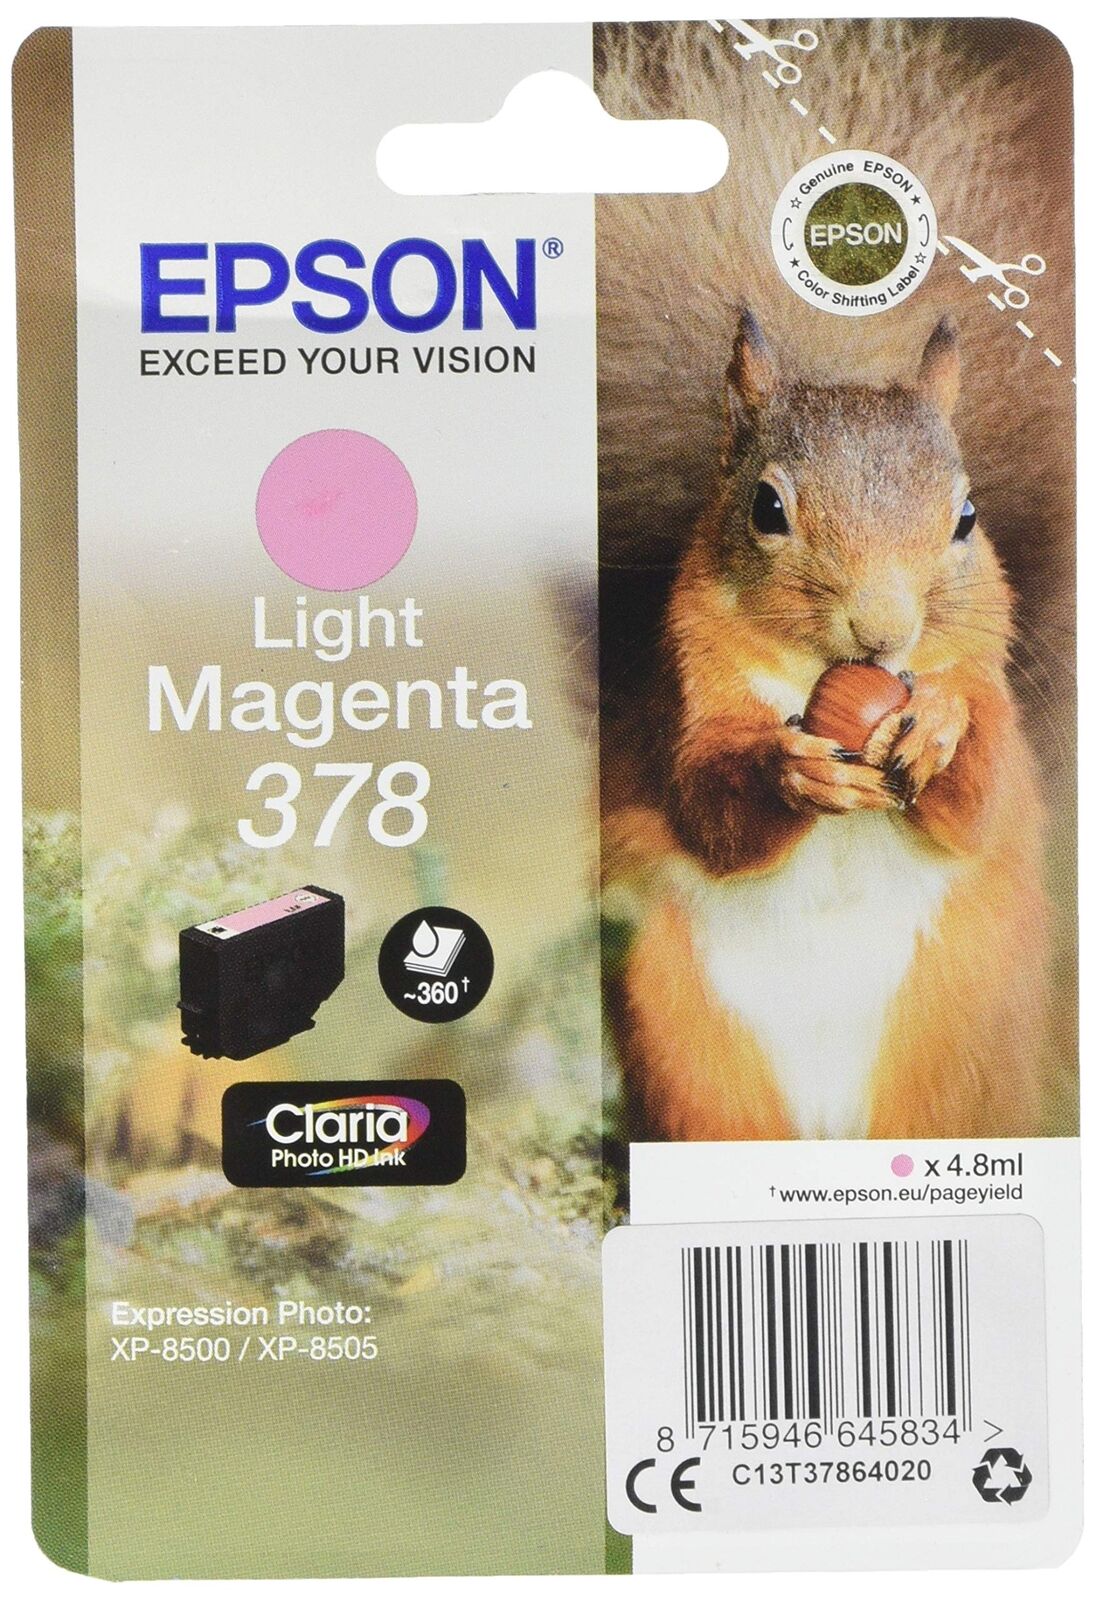 Epson C13T37864020 Inkjet Cartridge - Magenta